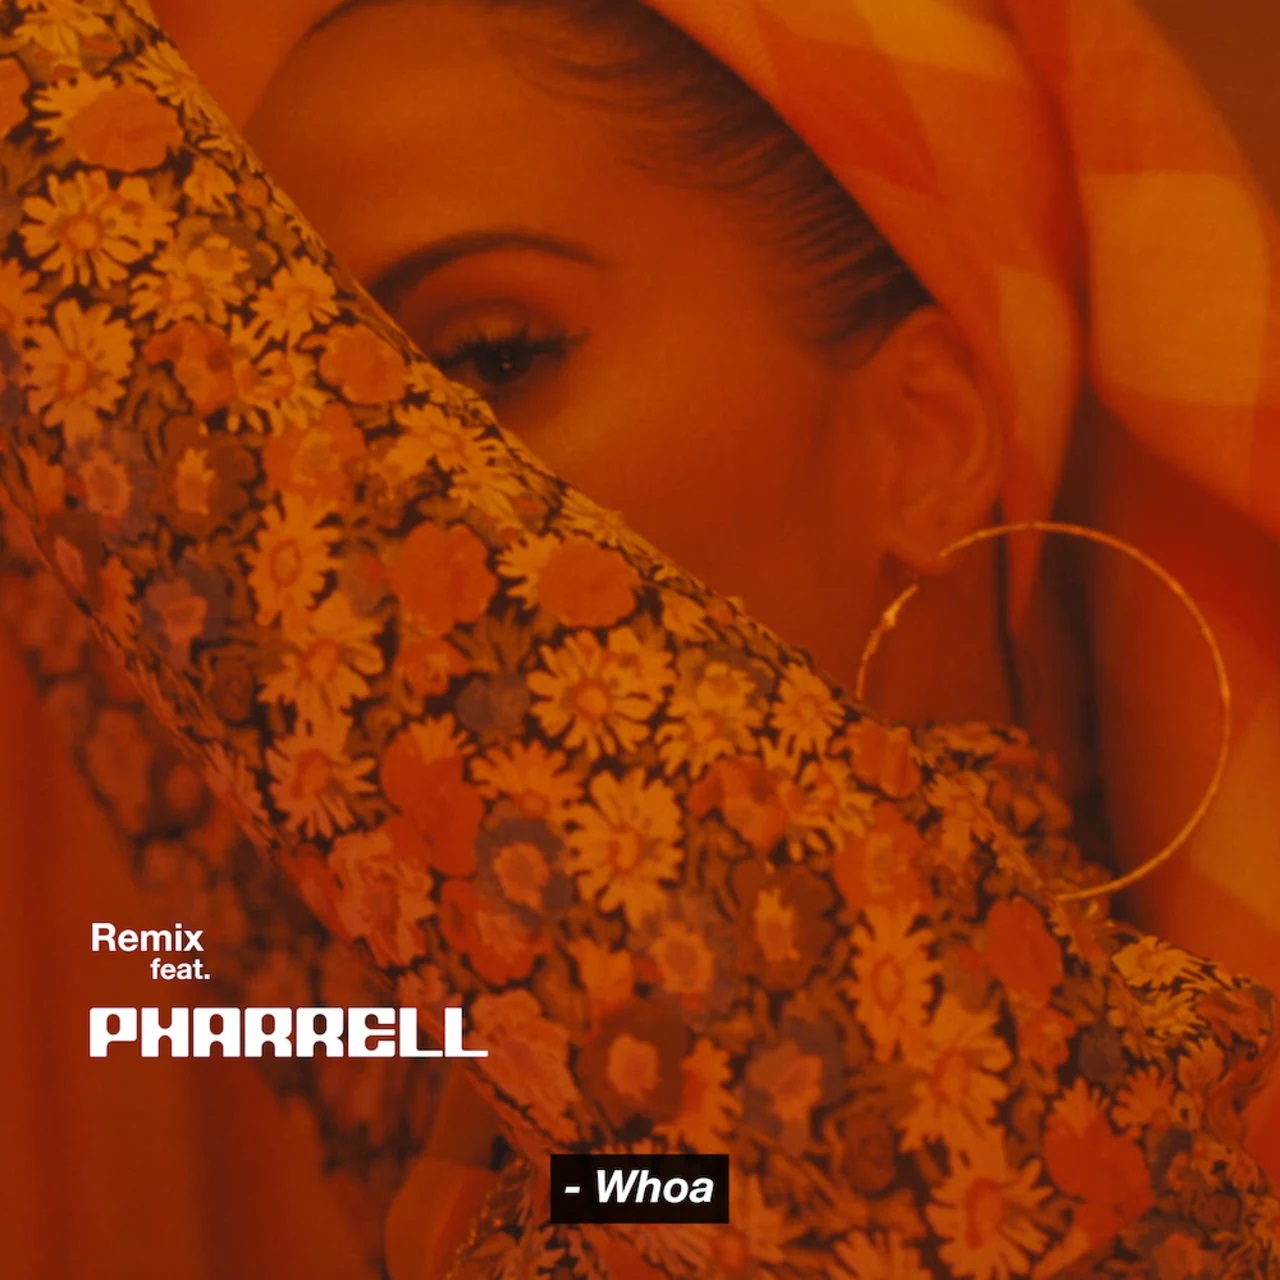 Snoh Aalegra shares "Whoa" remix feat. Pharrell